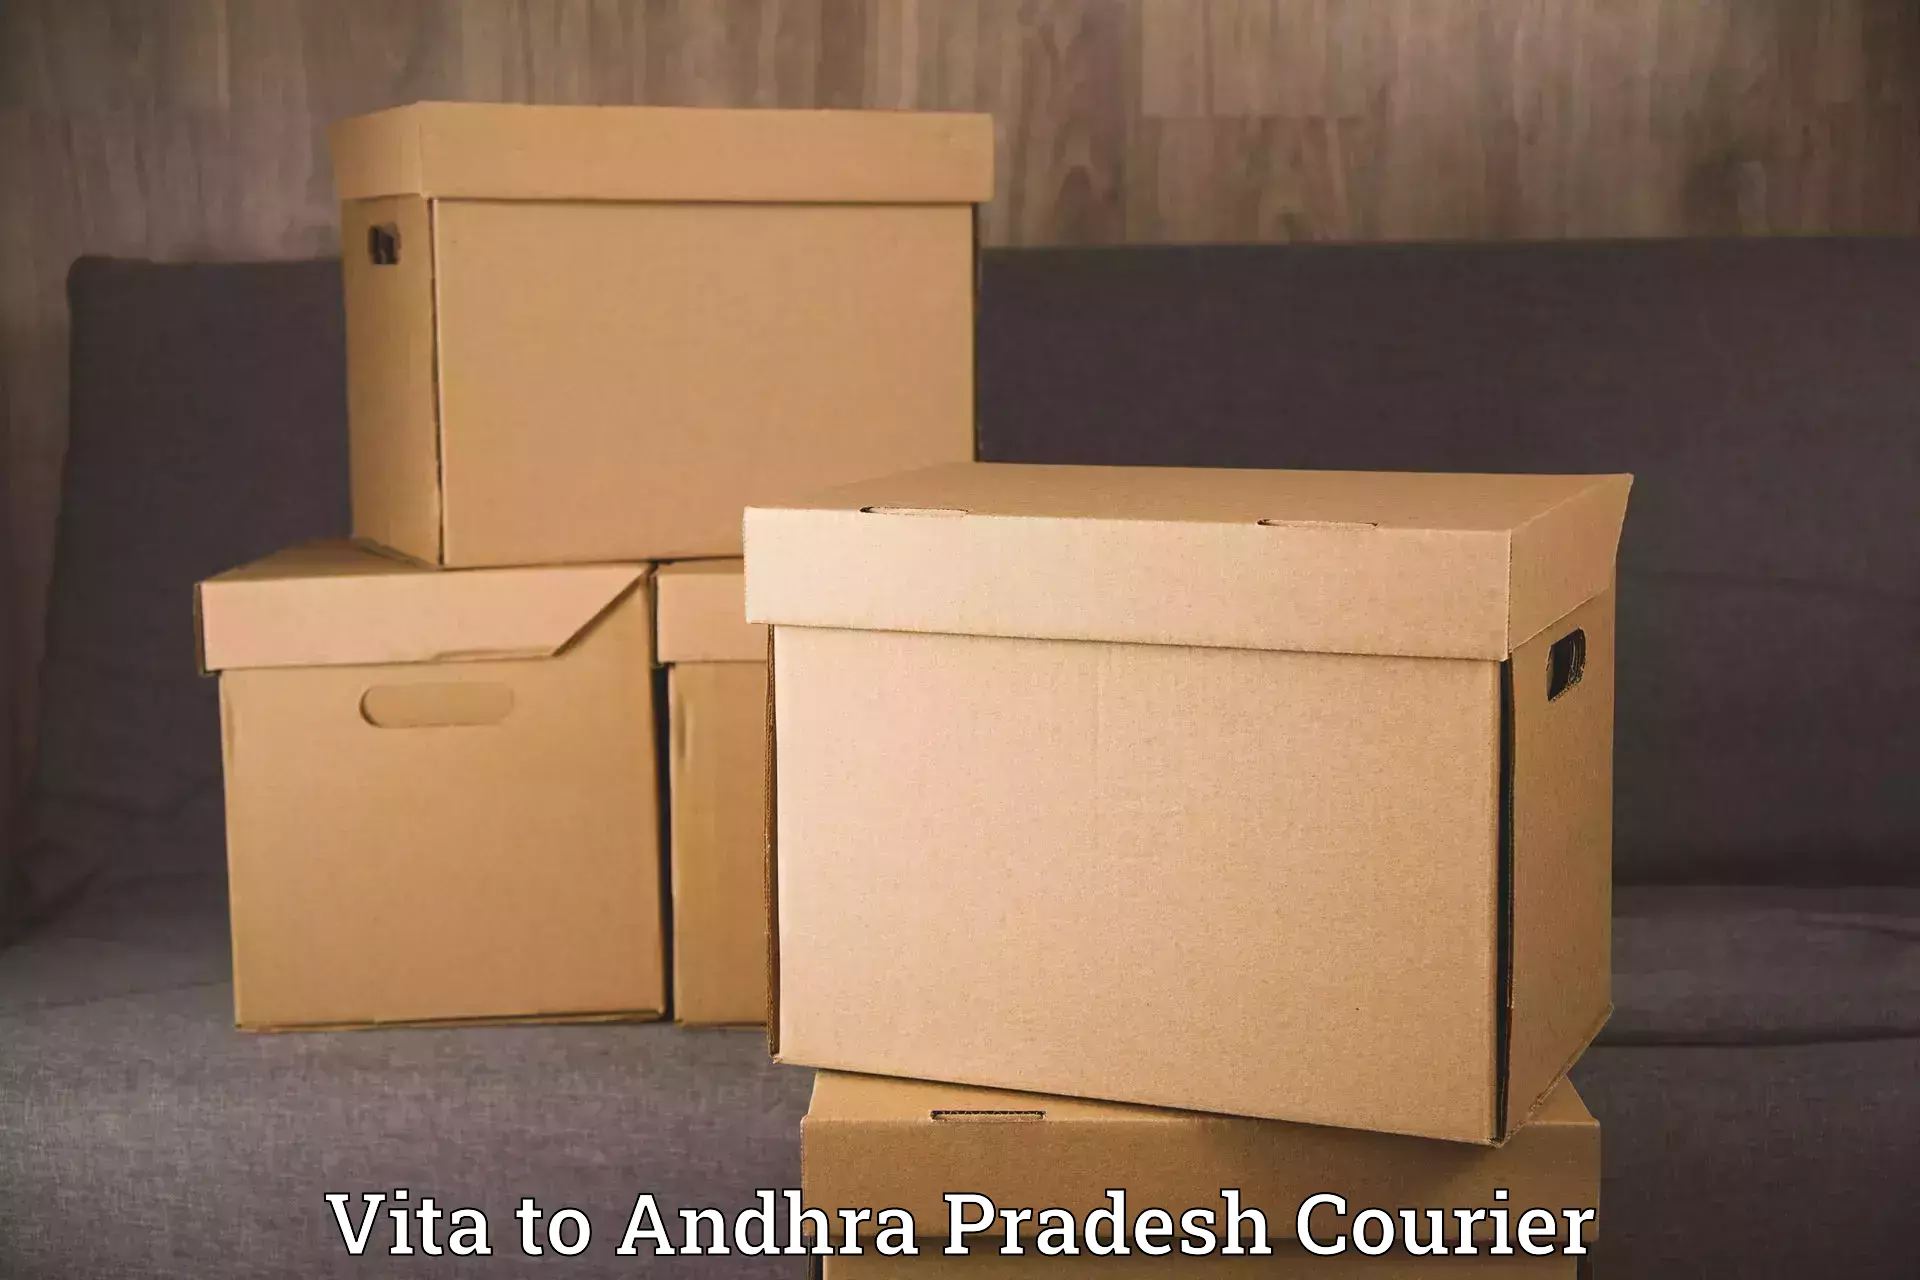 Moving and handling services Vita to Andhra Pradesh